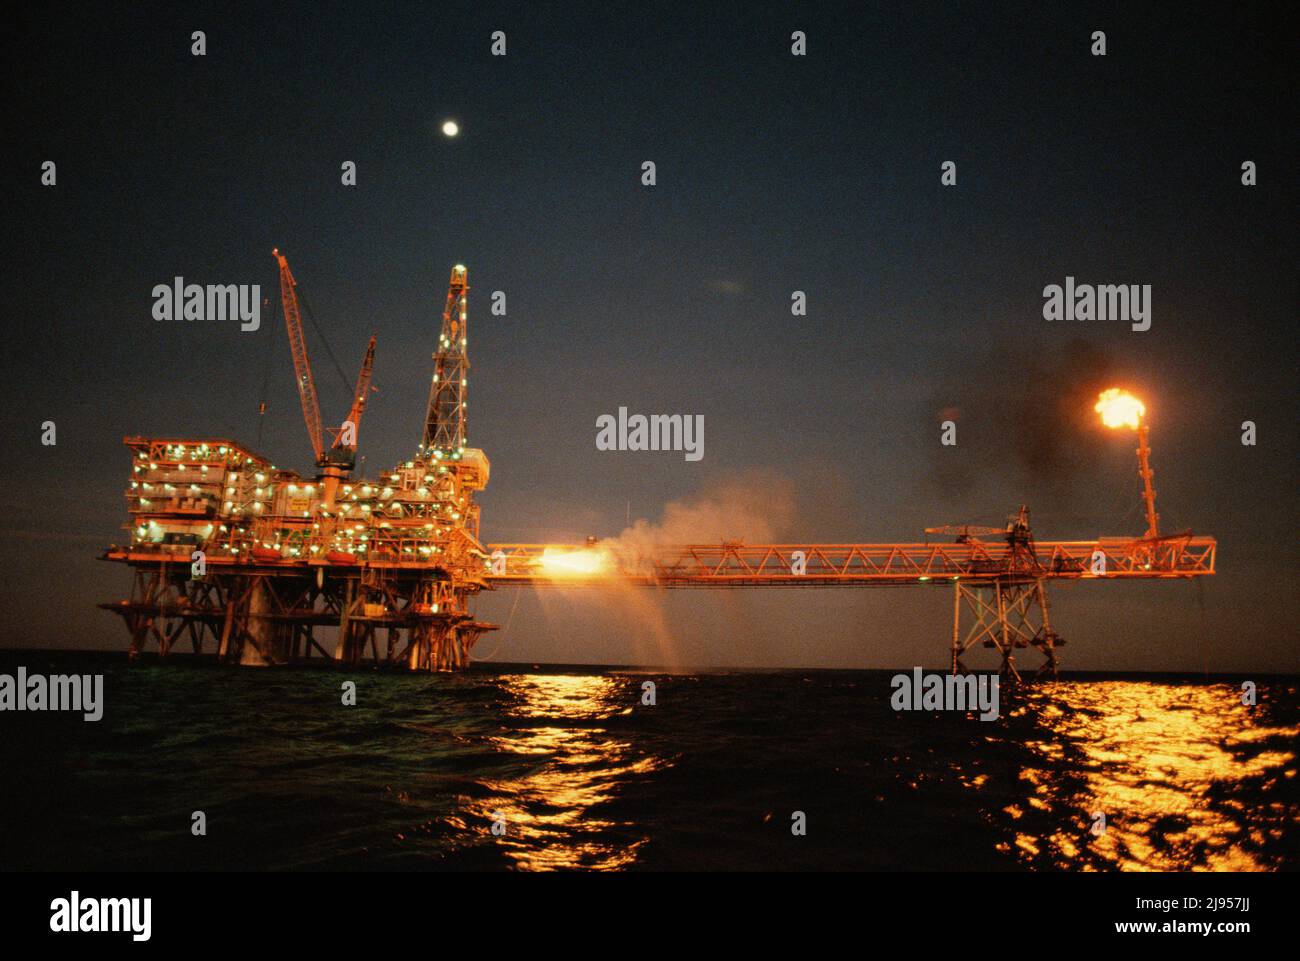 Australia. Australia Occidental. North Rankin A. Plataforma de extracción de gas offshore. Foto de stock